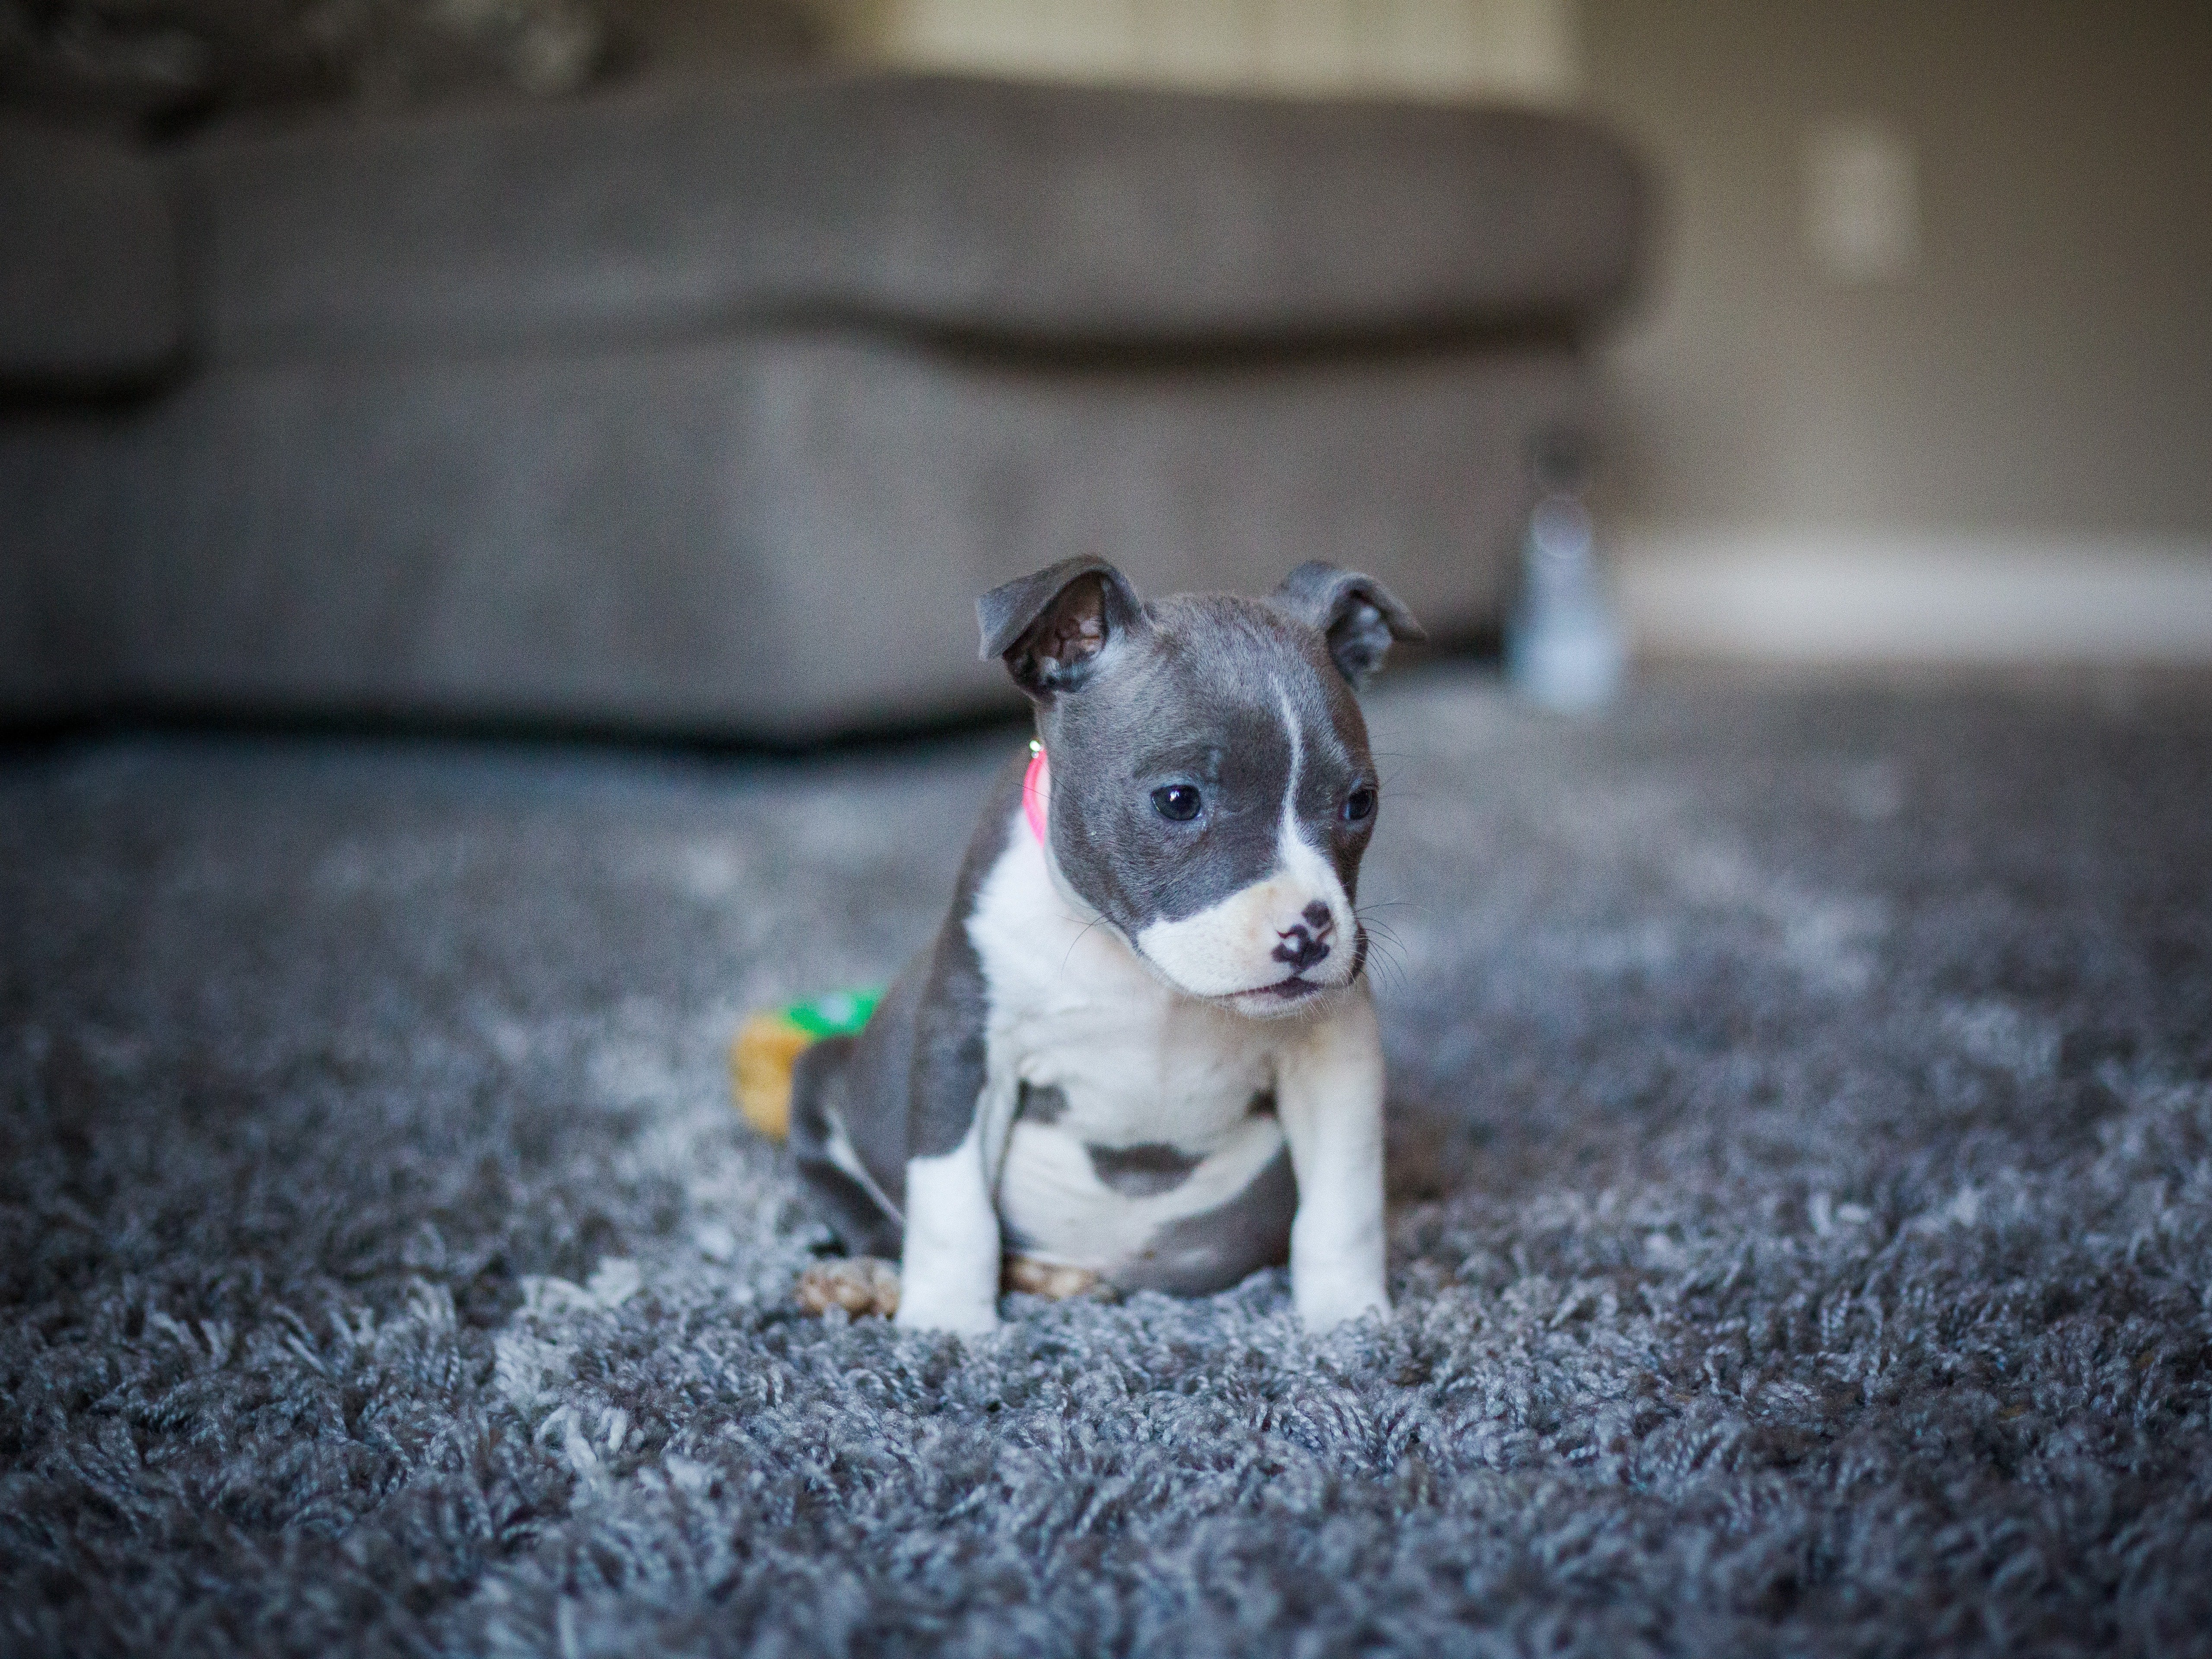 Pocket bully: Dog Breed Characteristics – Paws & Pup